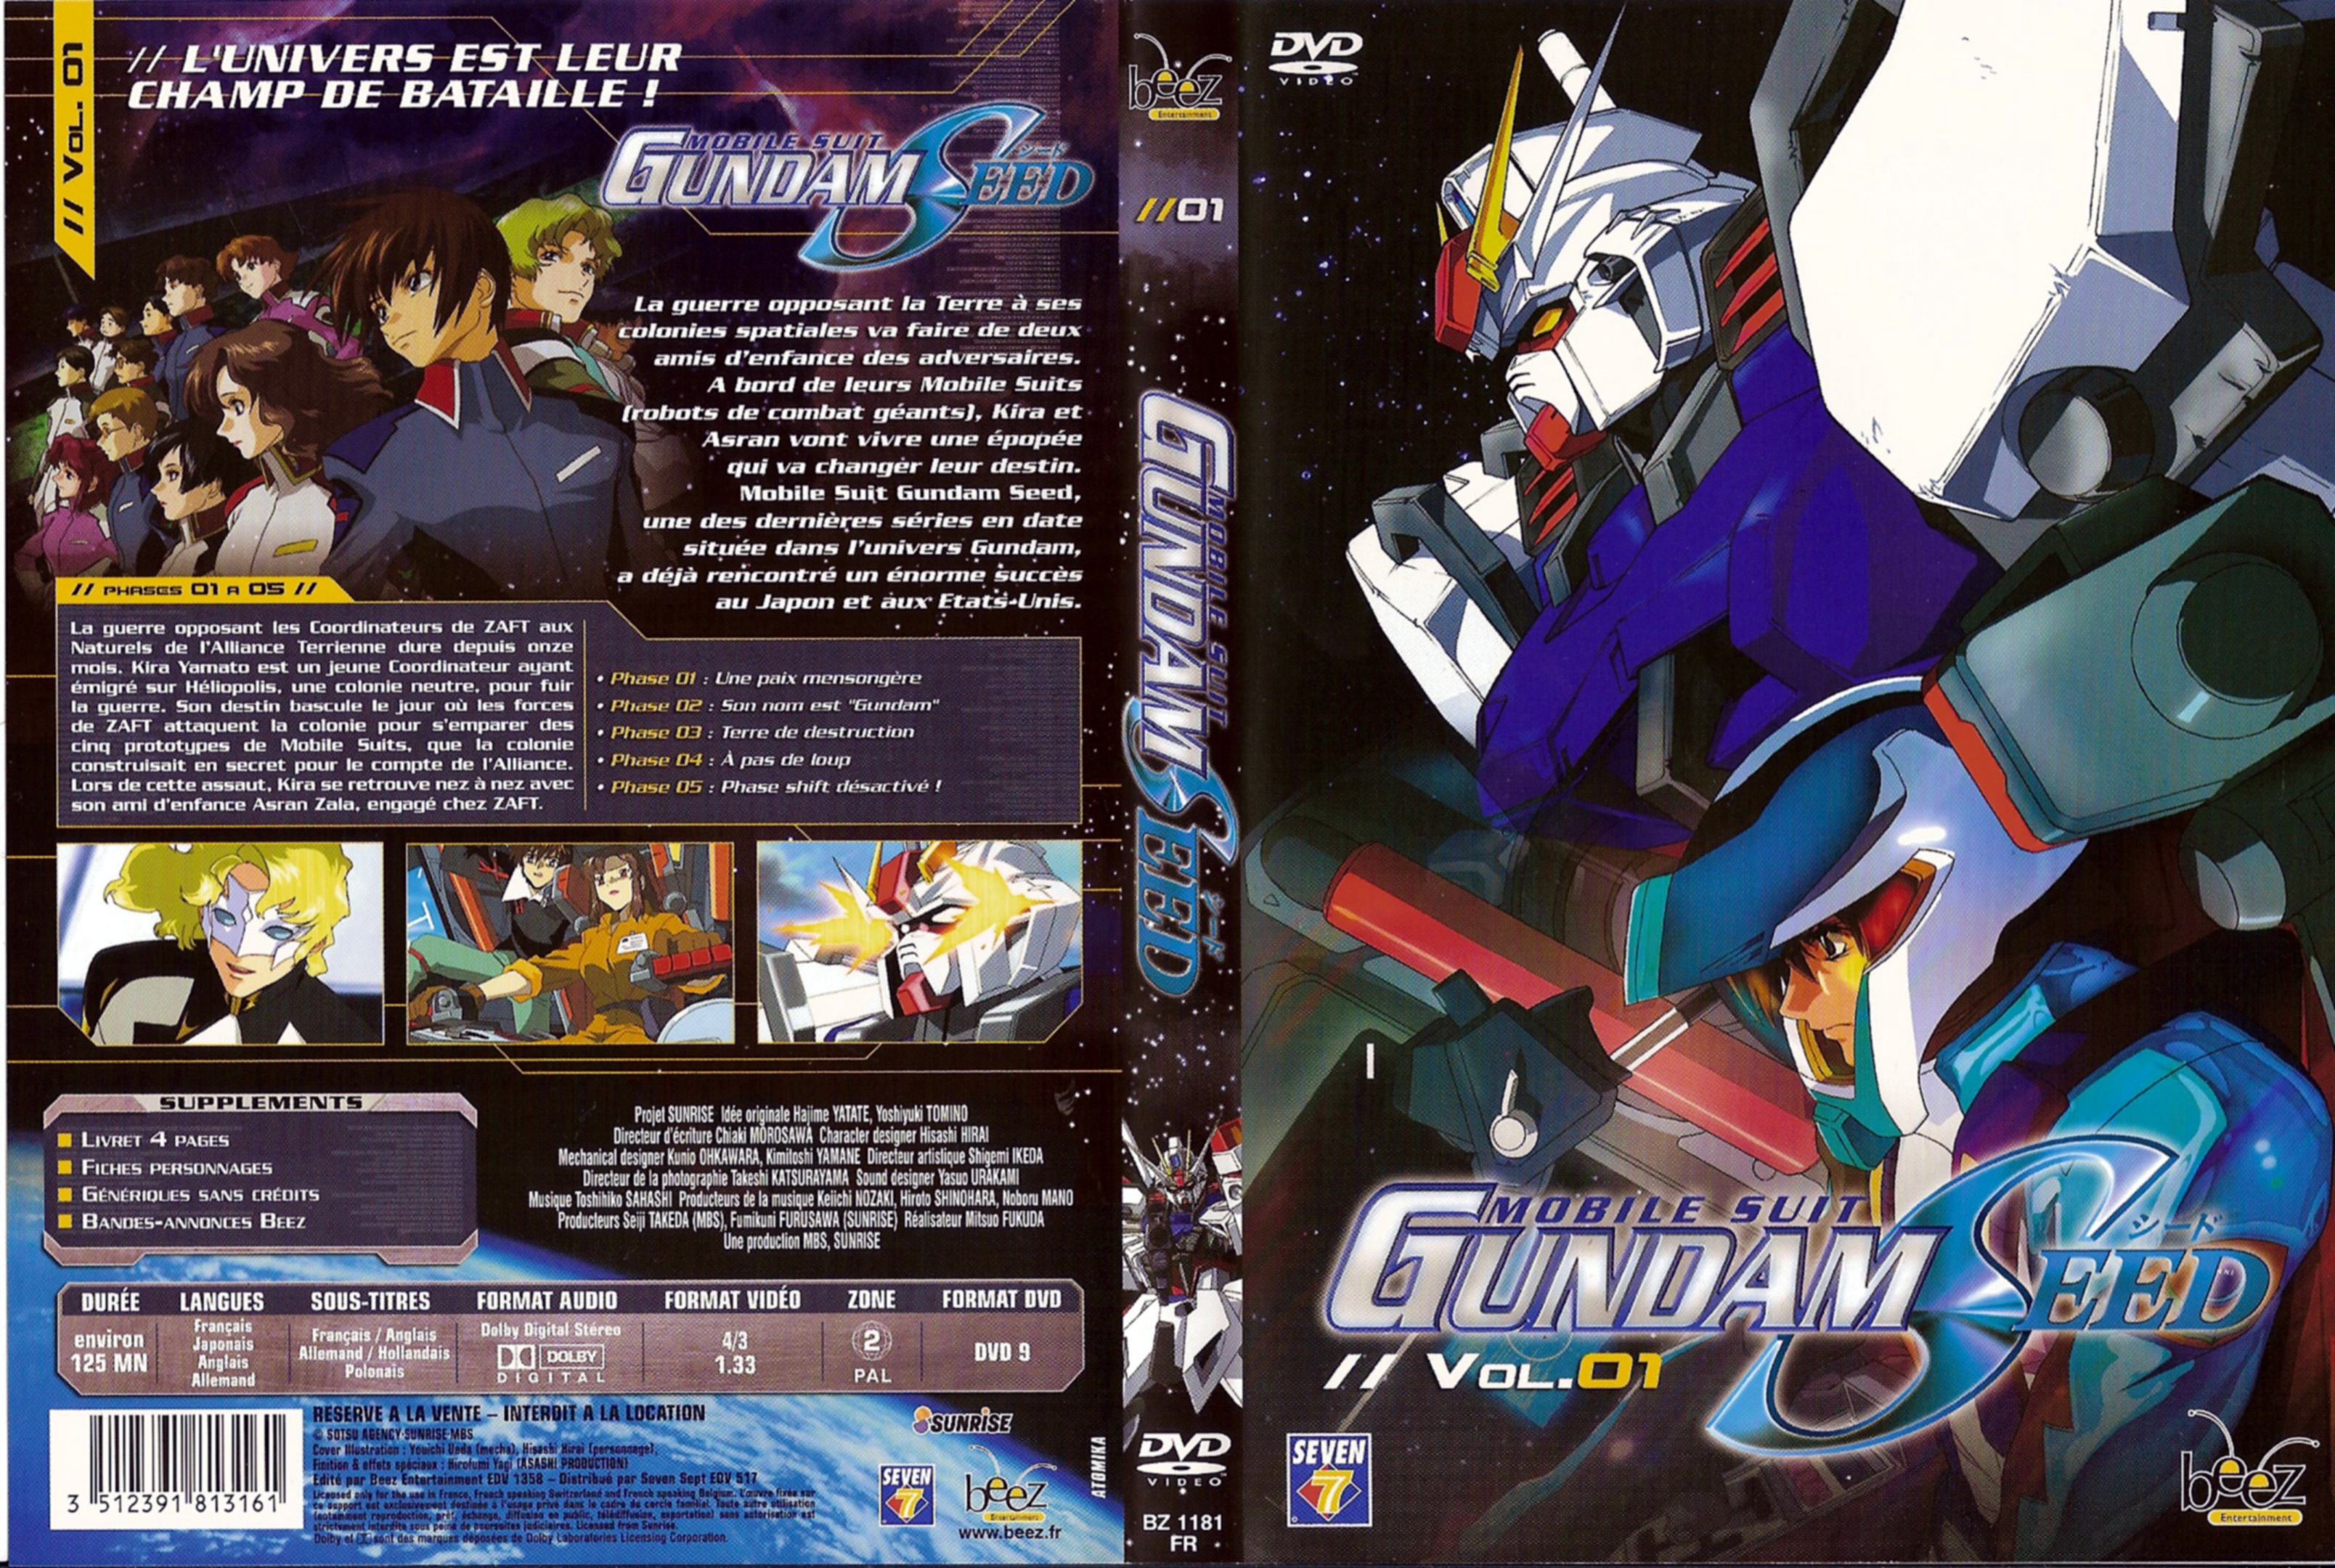 Jaquette DVD Gundam seed vol 01